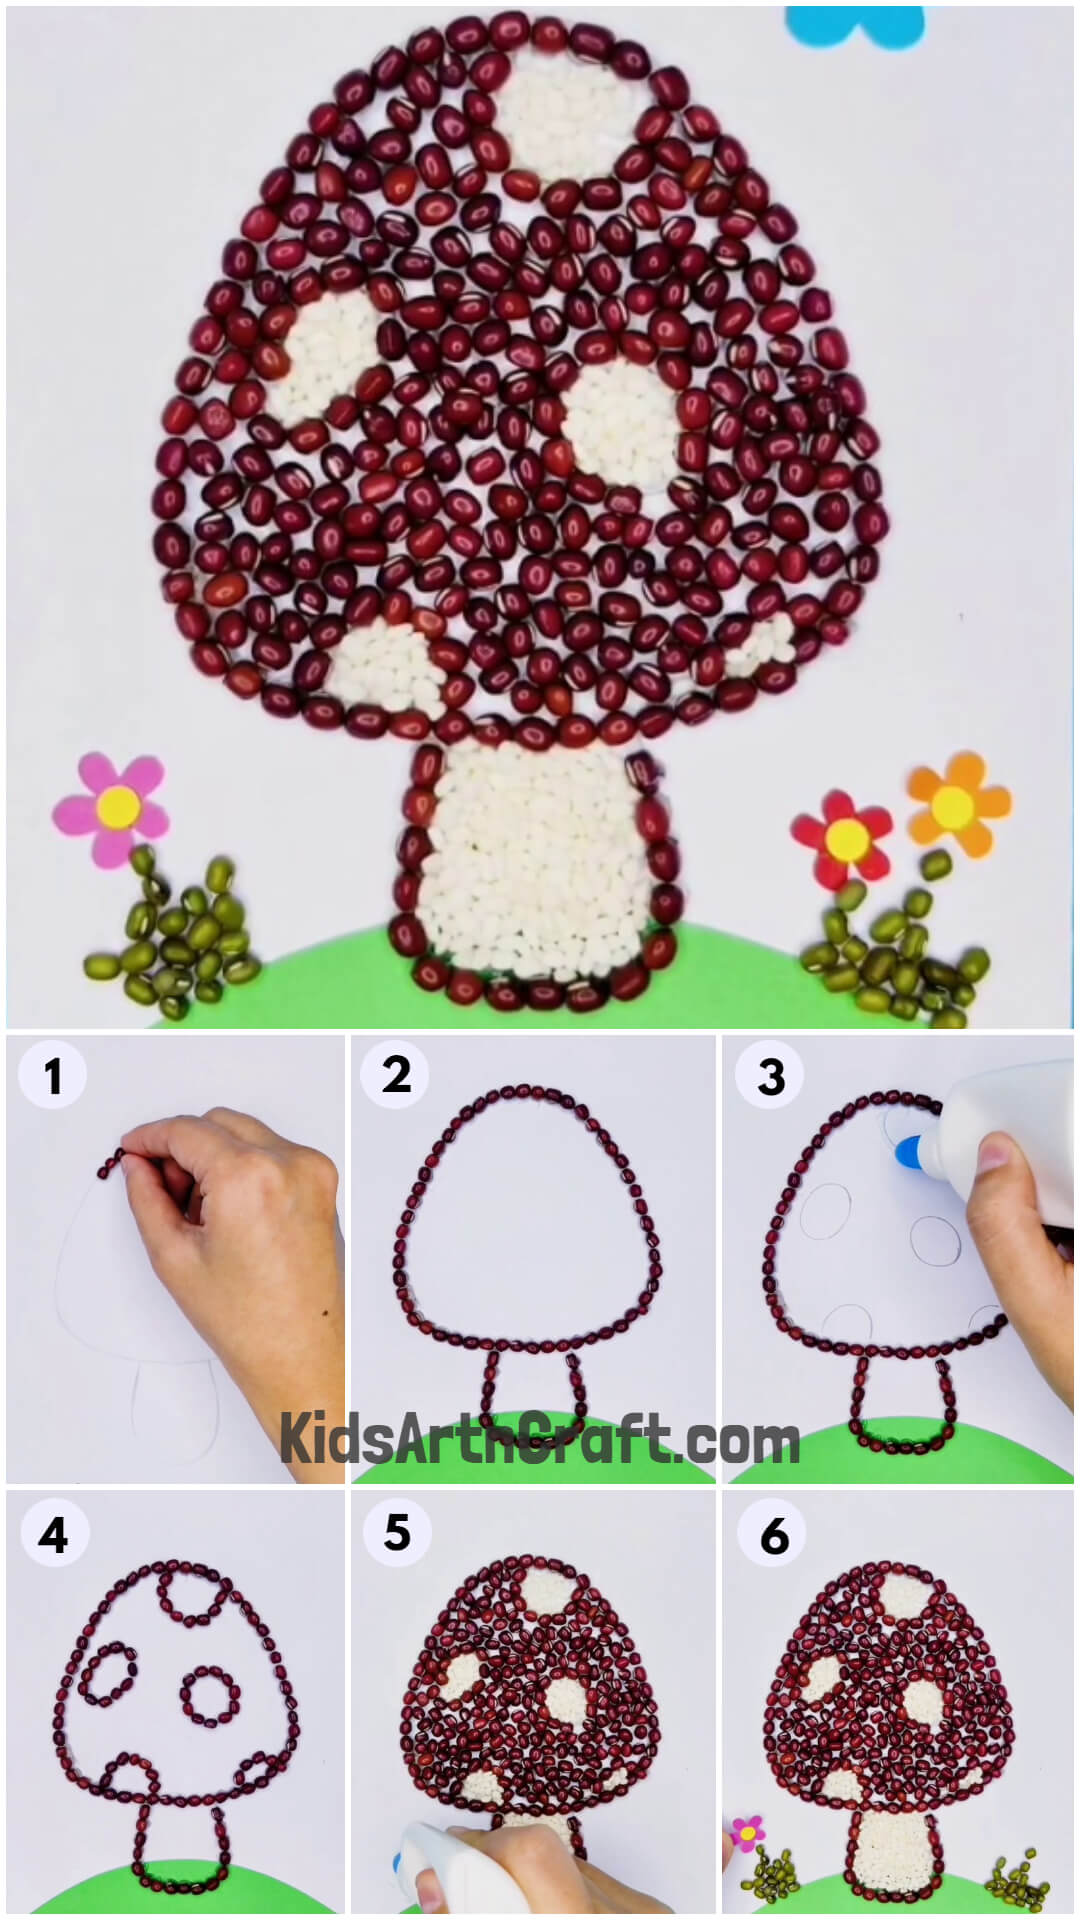 DIY Mushroom Painting Art With Seeds